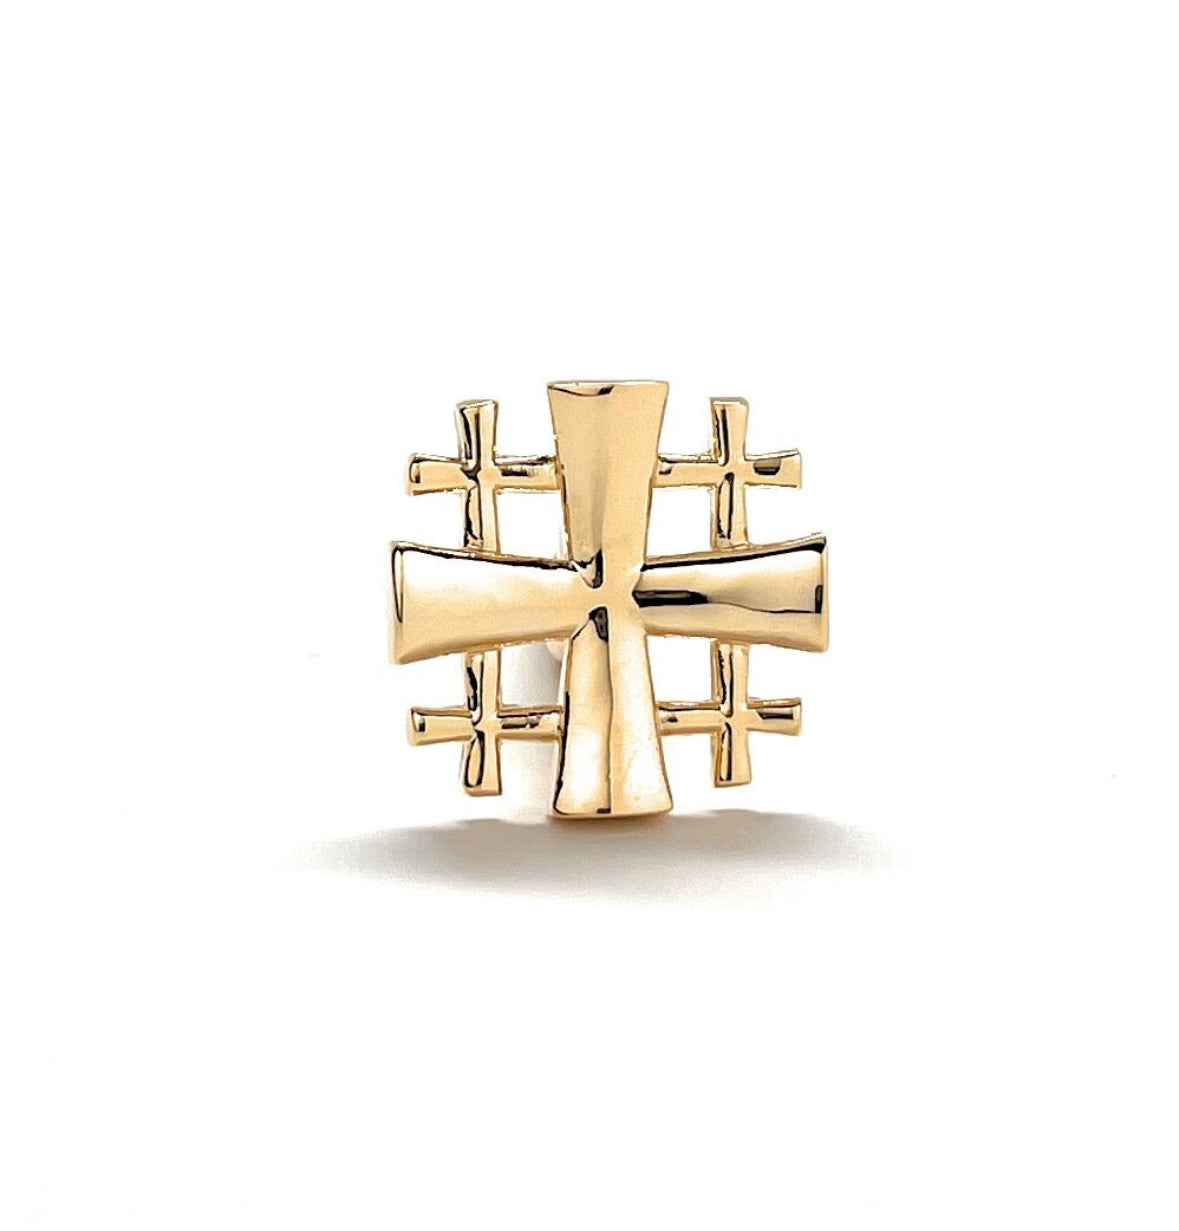 Jerusalem Cross Lapel Pin Crusaders Shield Cut Out Design Gold Tone 3D Five-Fold Cross Pin Tie Tack Lanyard Pins